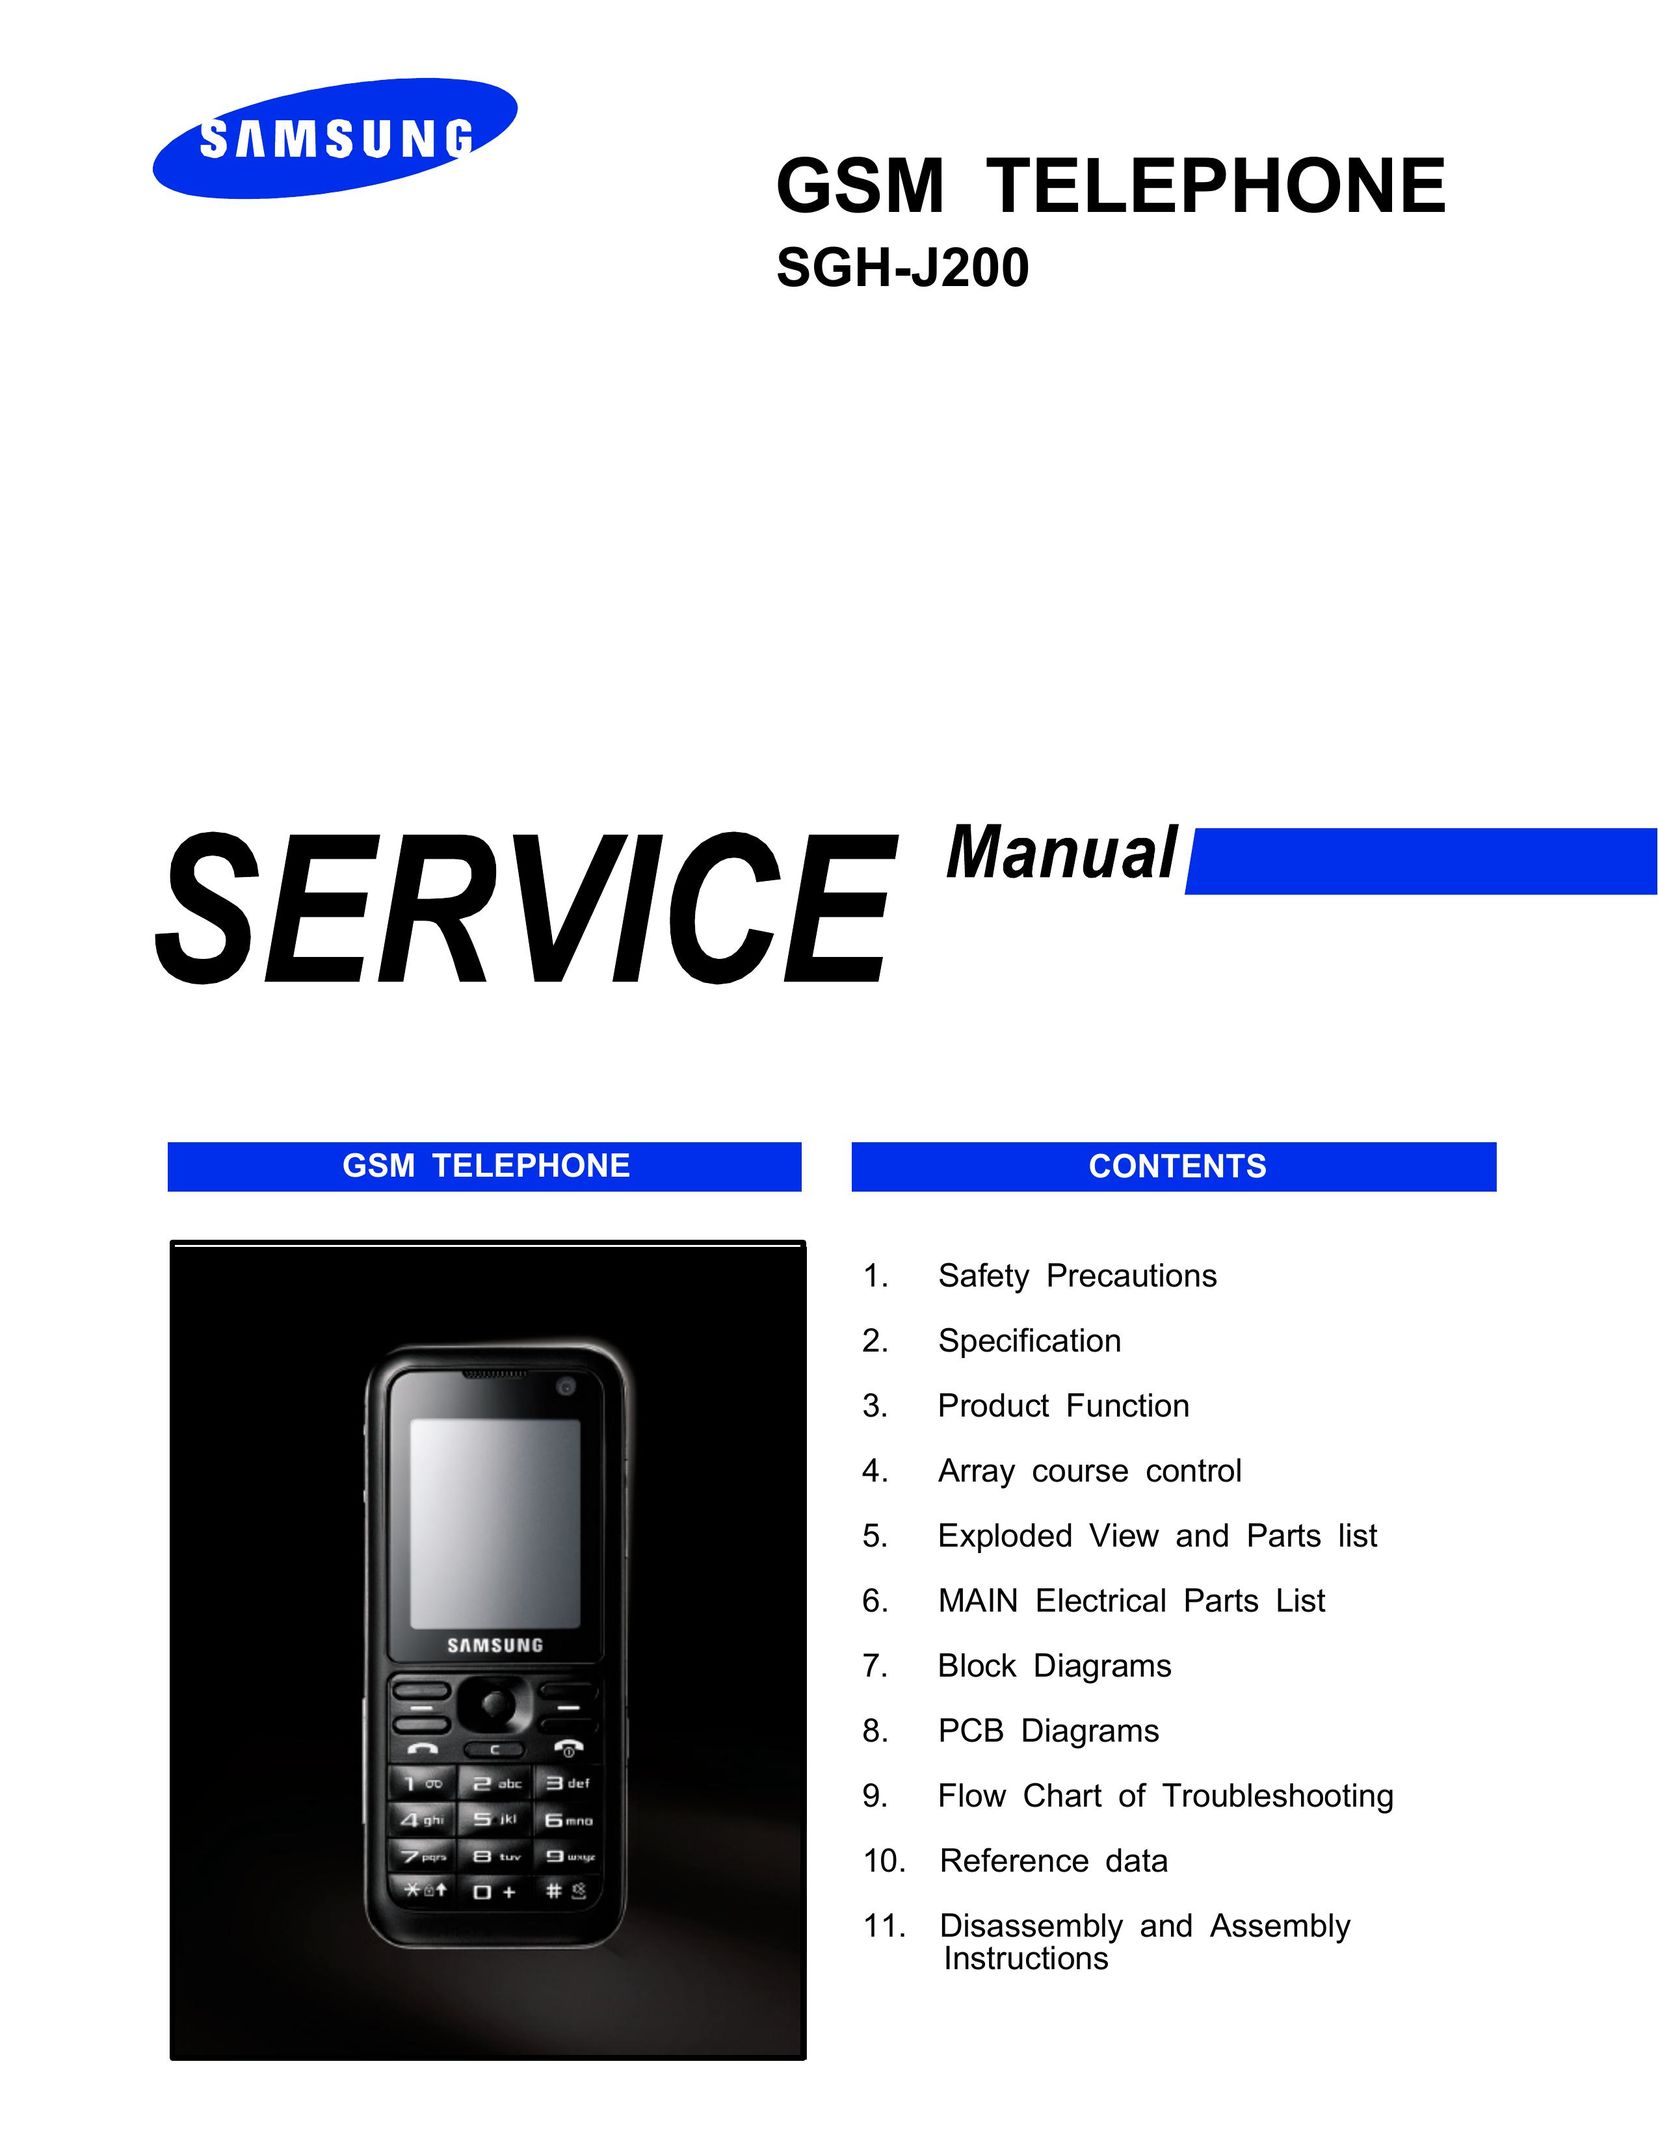 Sharp SGH-J200 Cell Phone User Manual